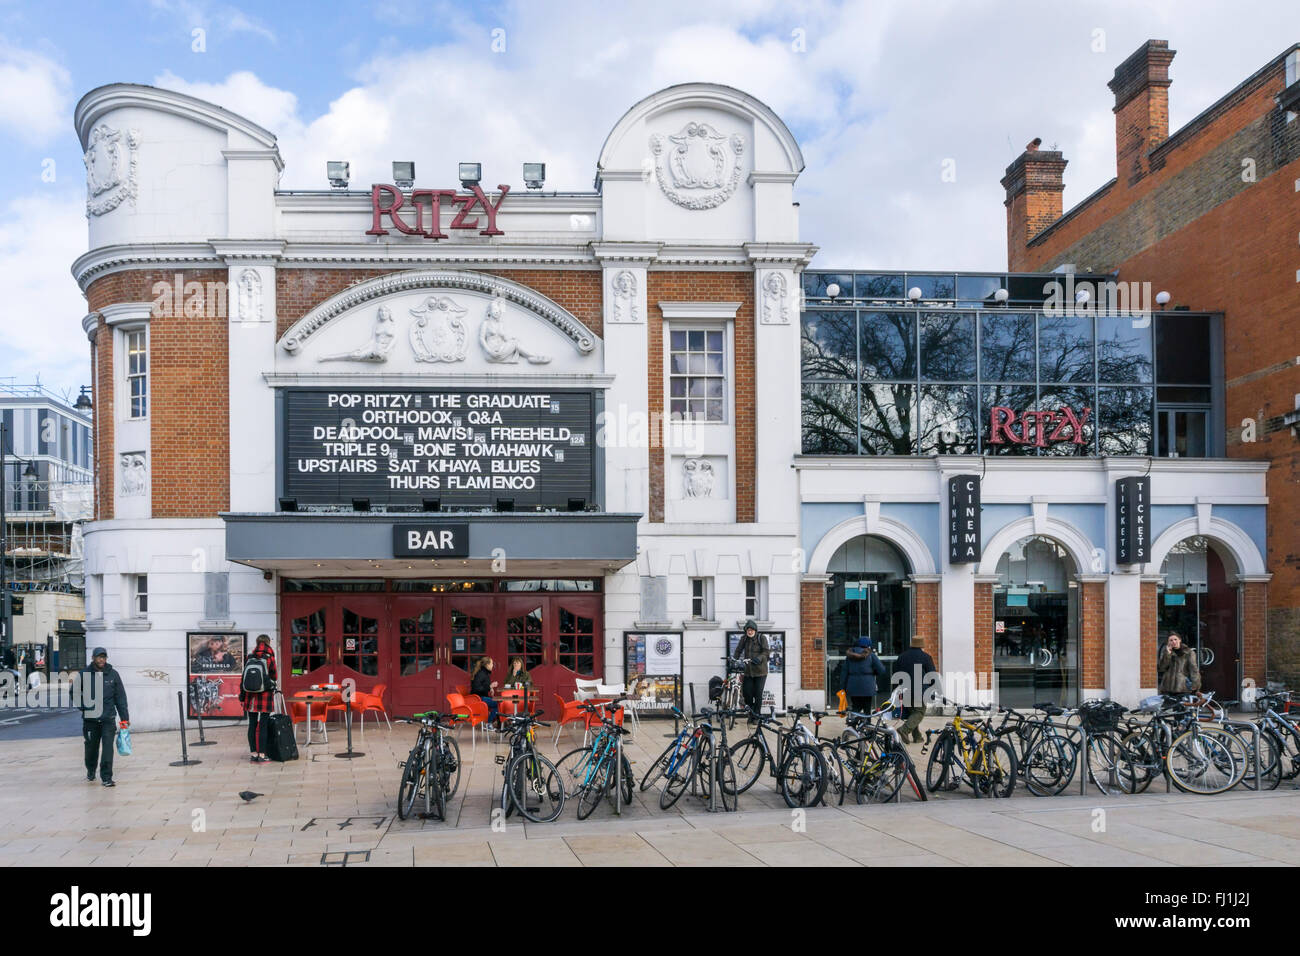 Ritzy Cinema in Brixton, South London. Stock Photo